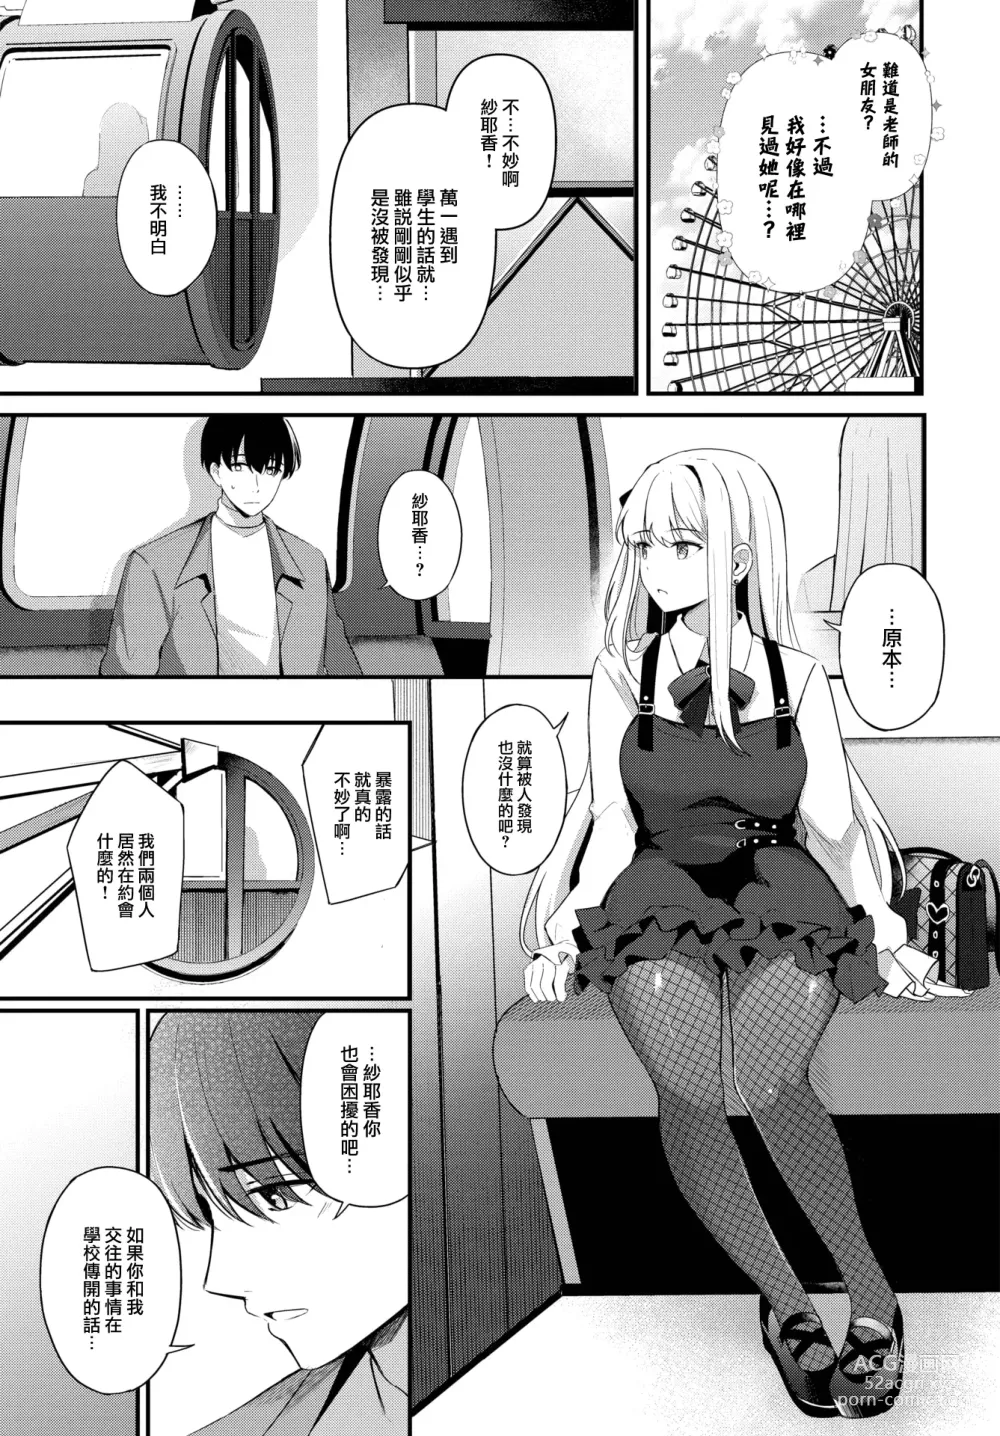 Page 4 of manga Joou no Shitsuke - Queens discipline ~after~